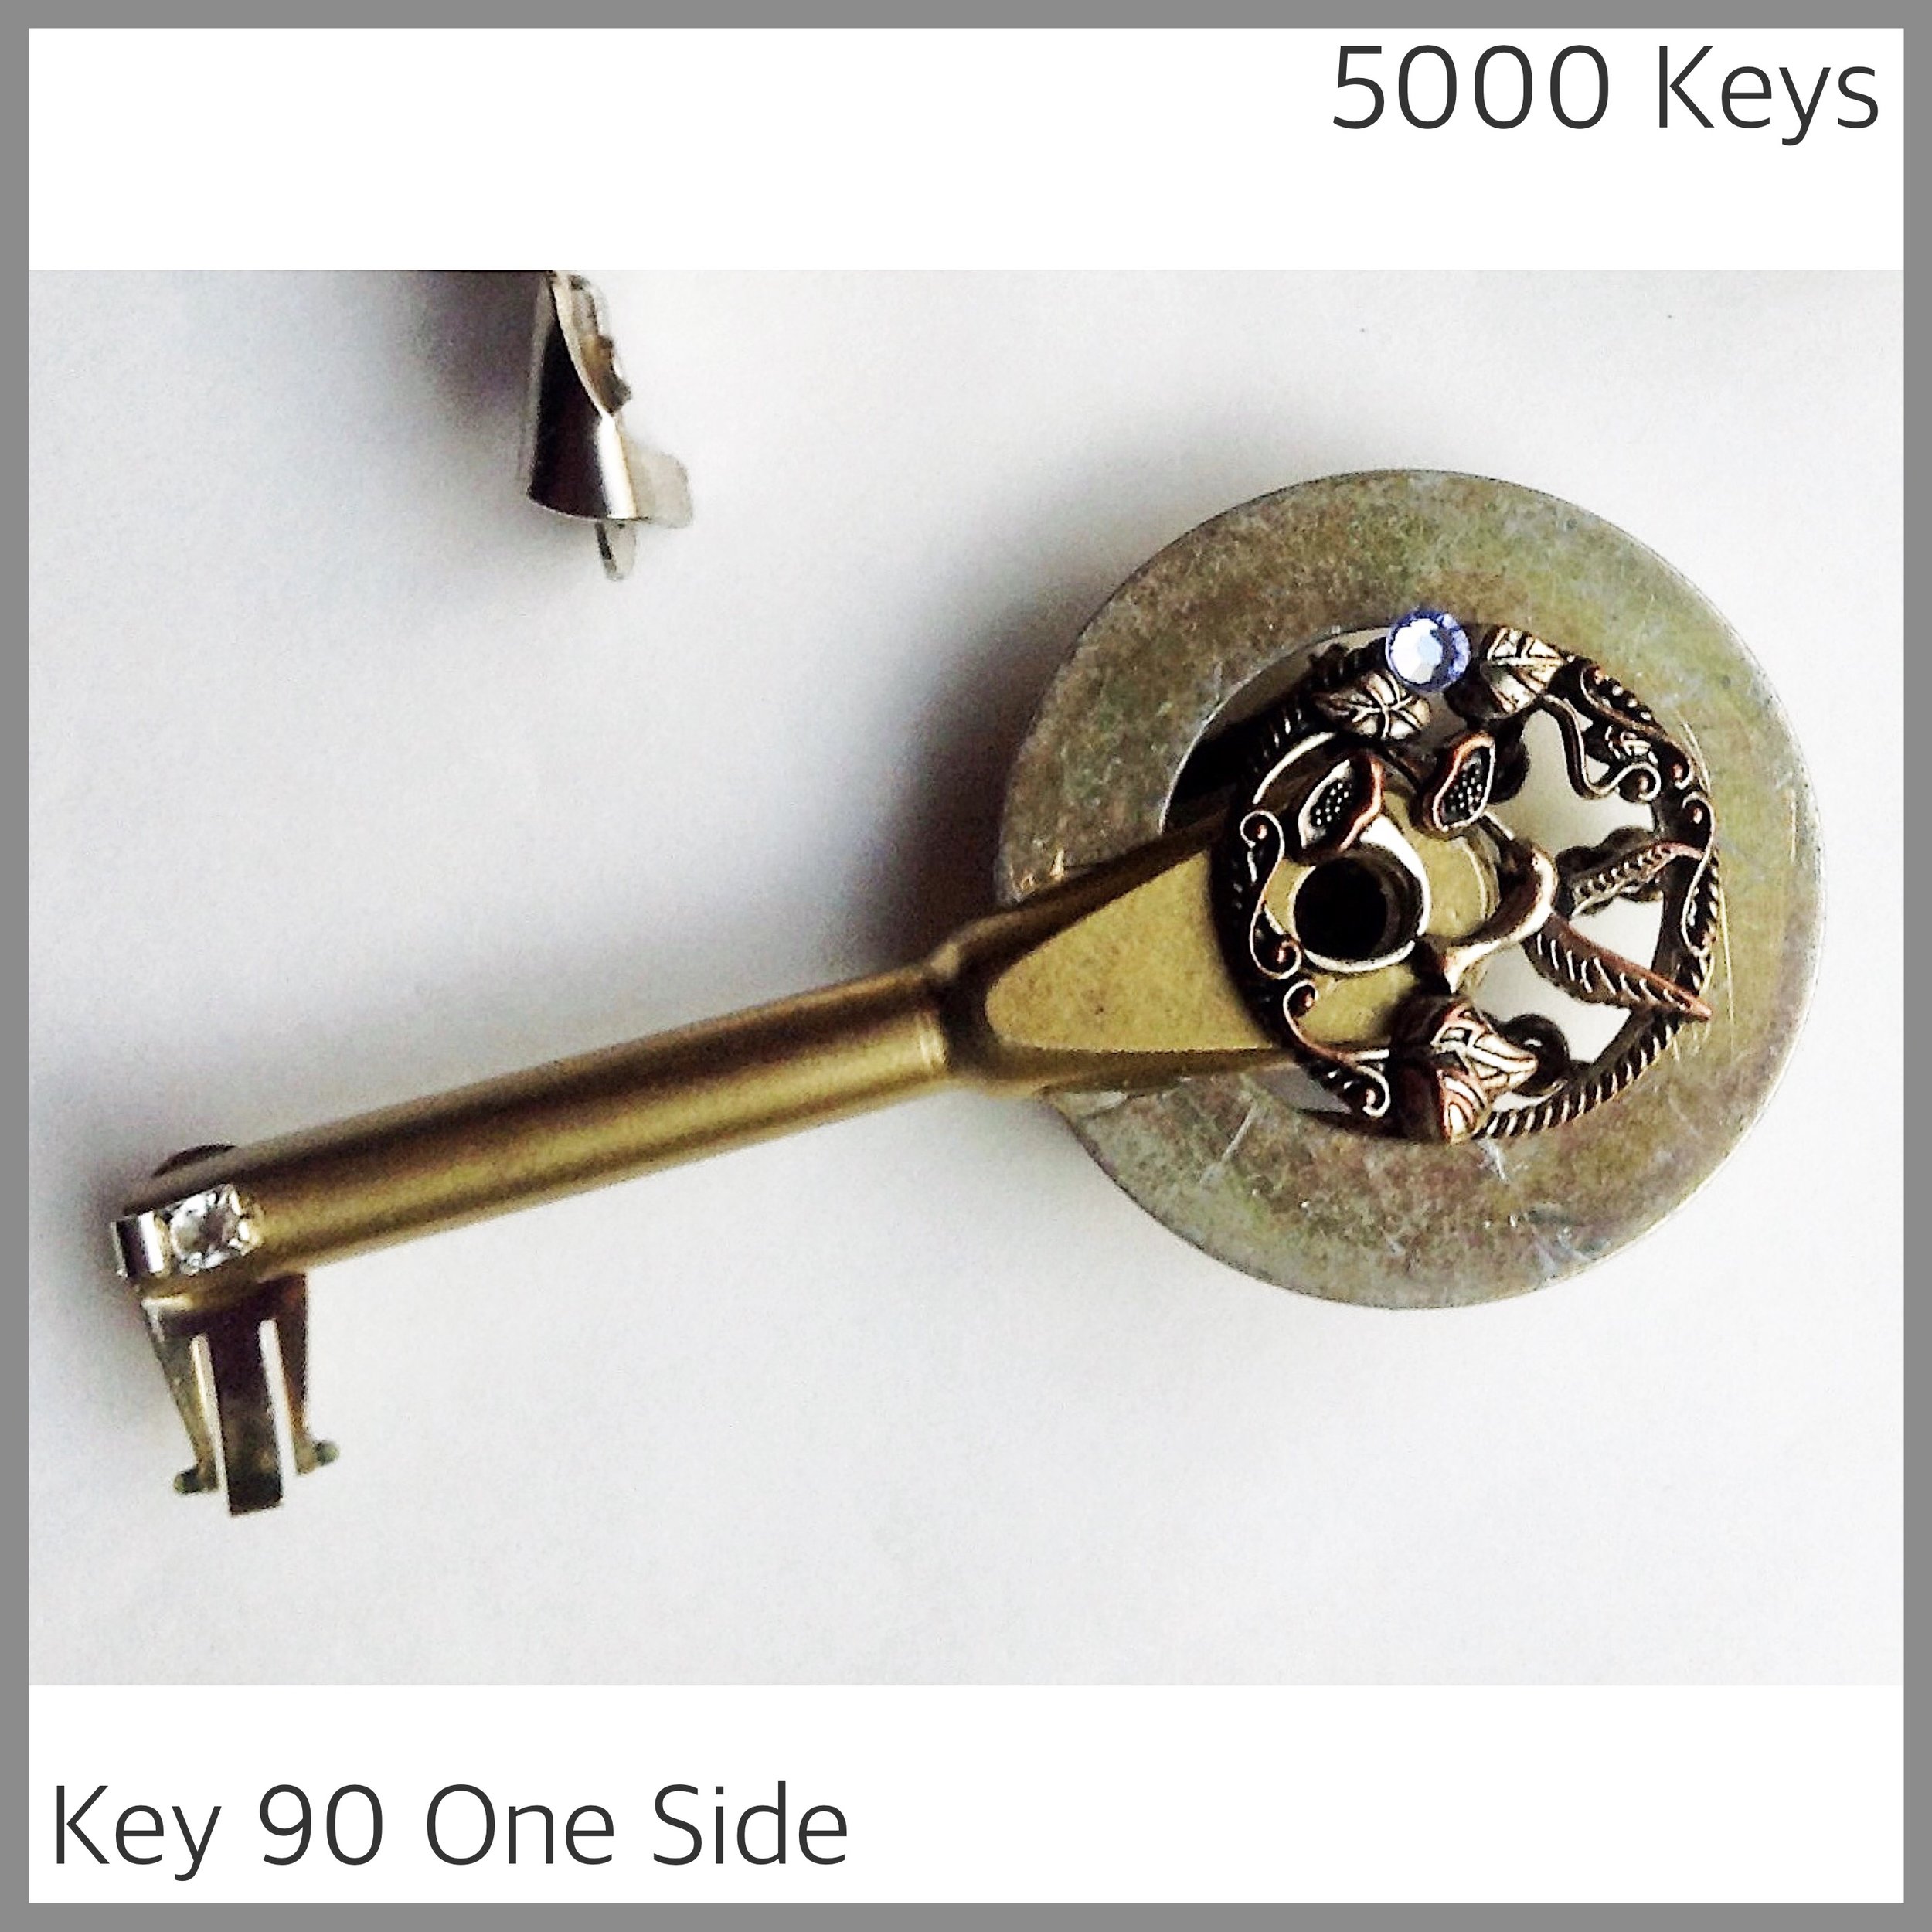 Key 90 one side.JPG